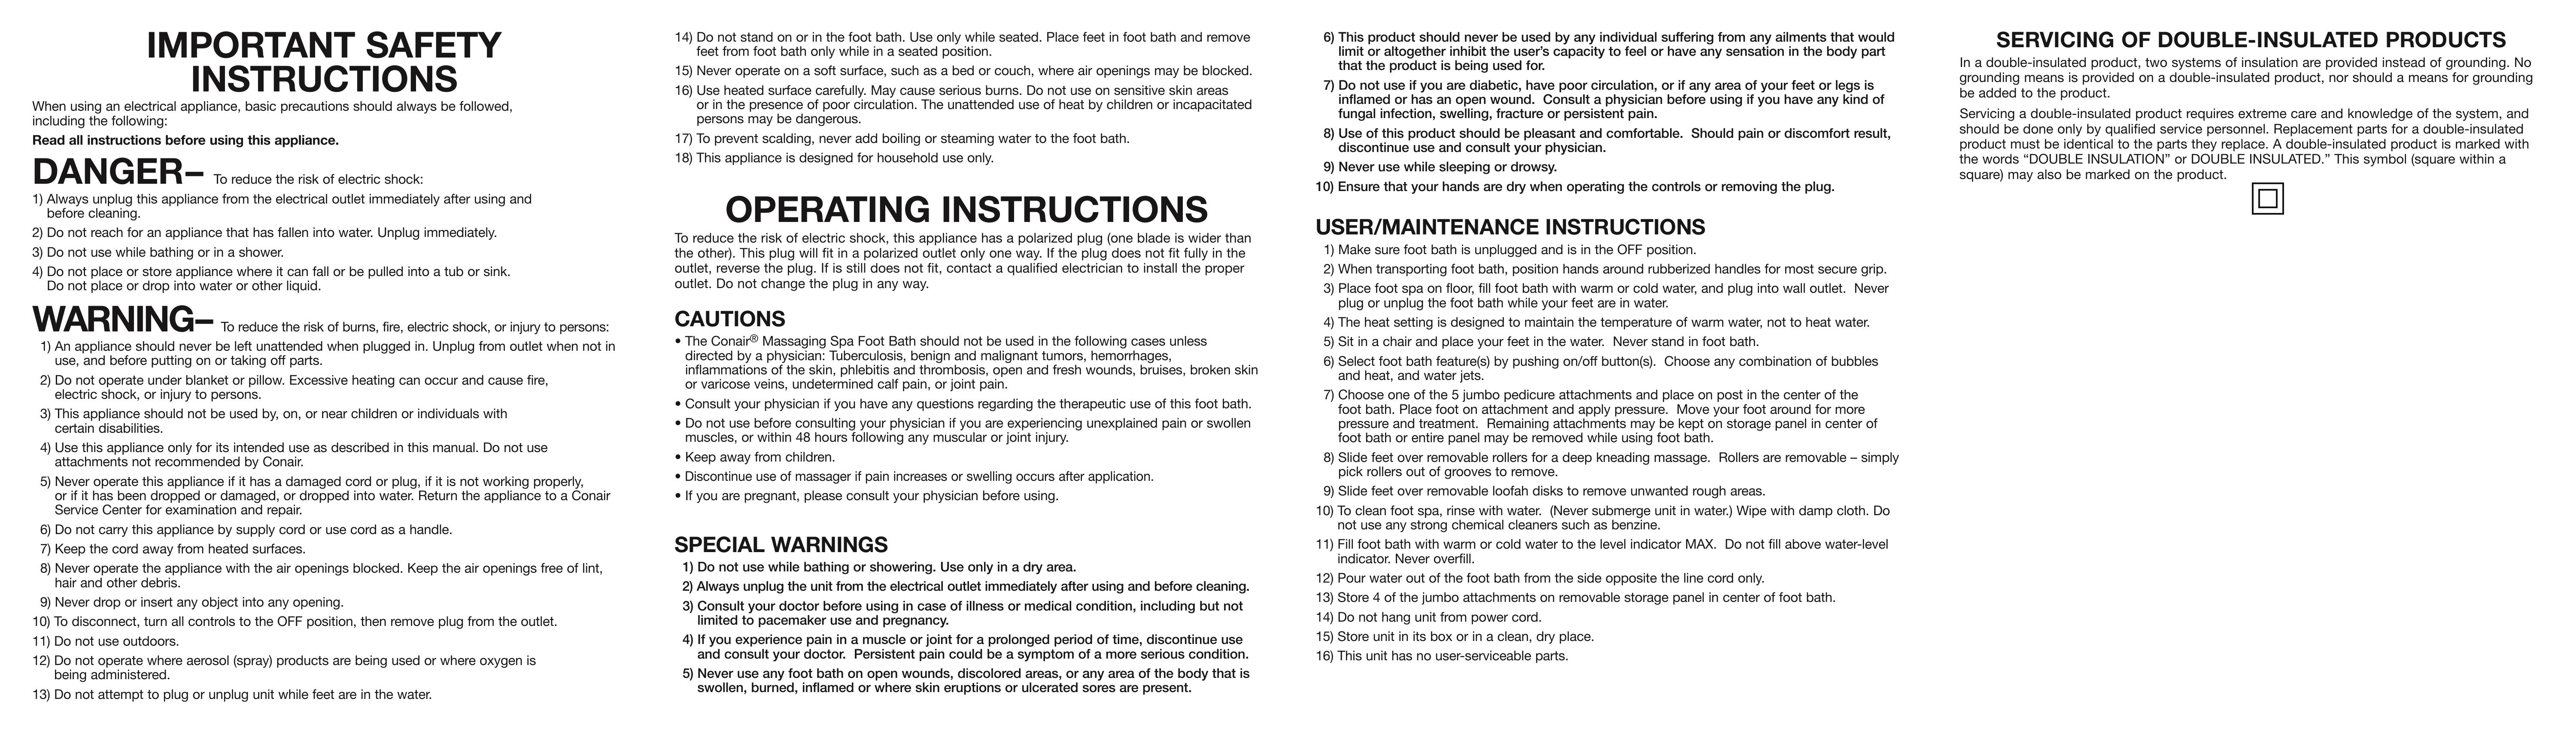 Conair FB33R Pedicure Spa User Manual